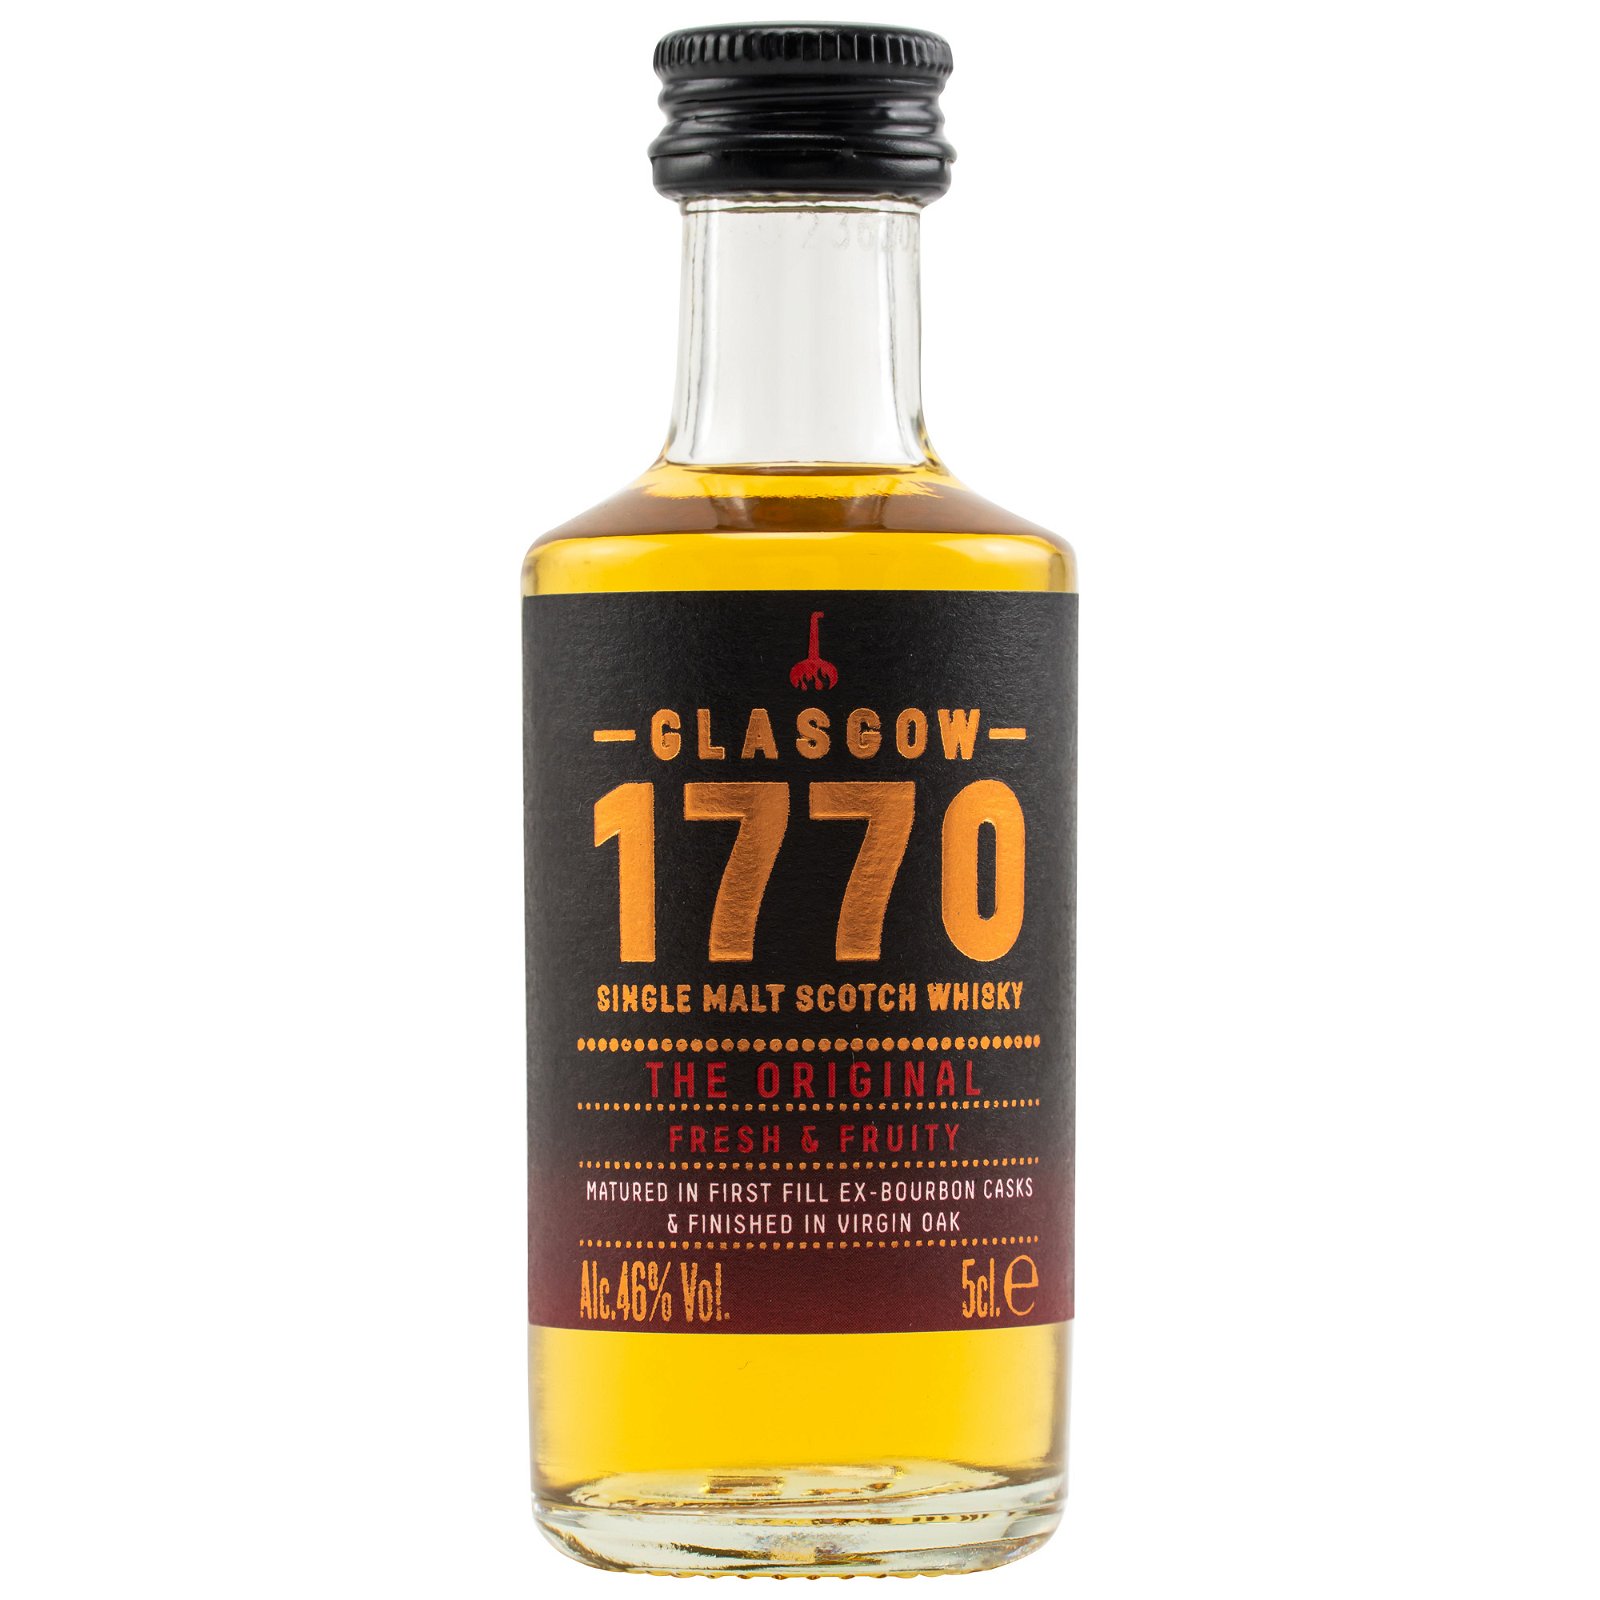 1770 Glasgow Single Malt Scotch Whisky - The Original (Miniatur)